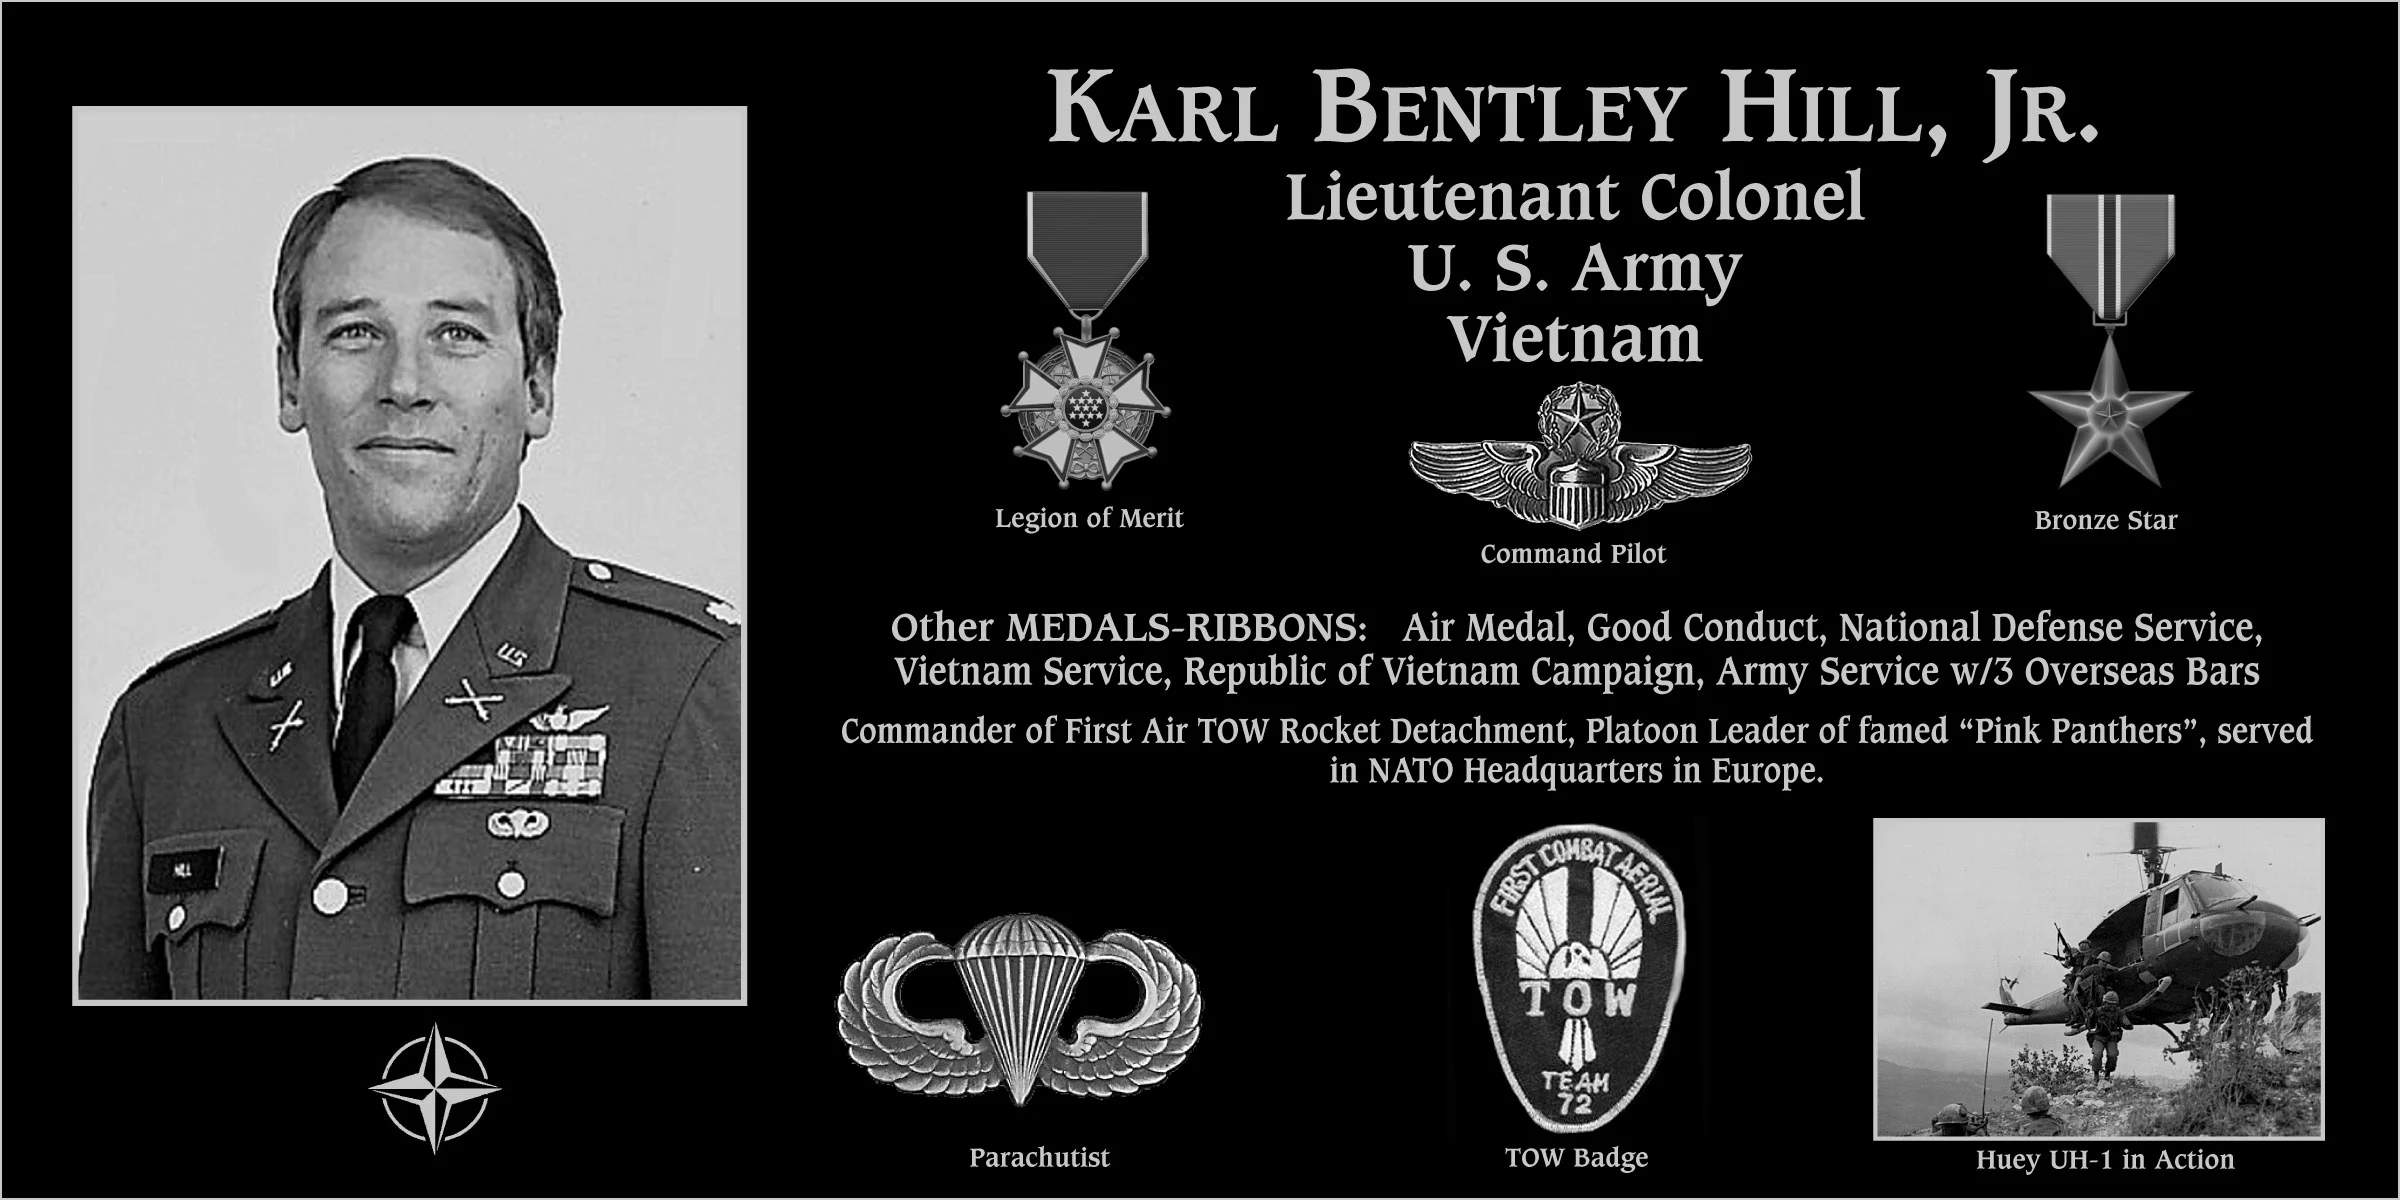 Karl Bentley Hill, jr